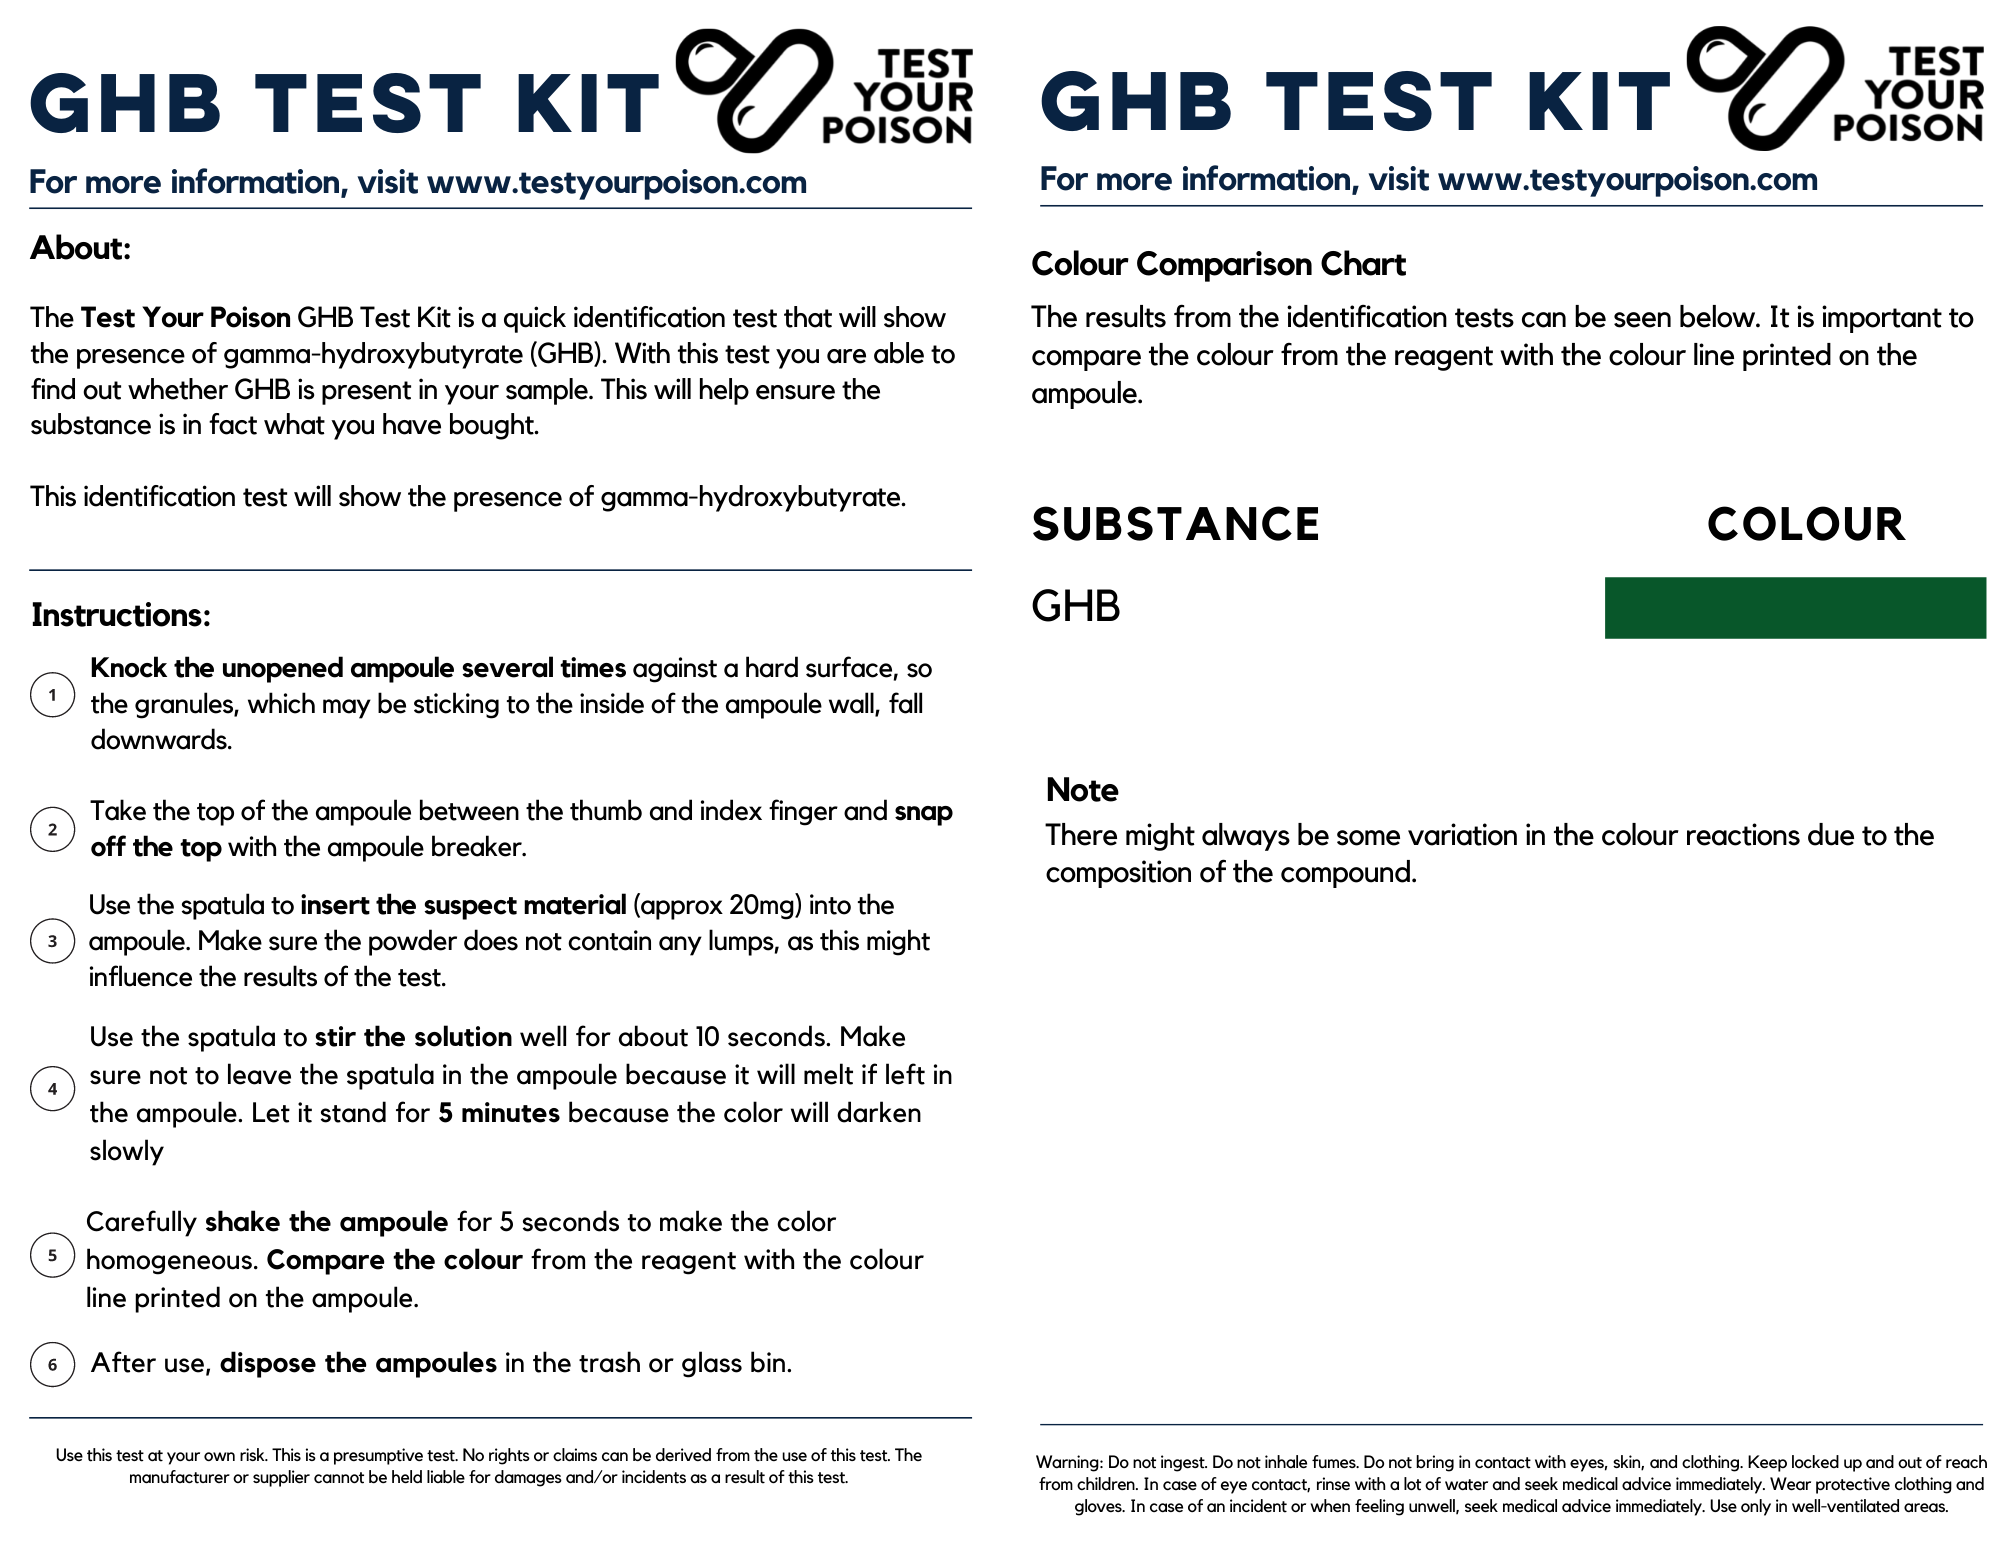 GHB Test Kit Instructions